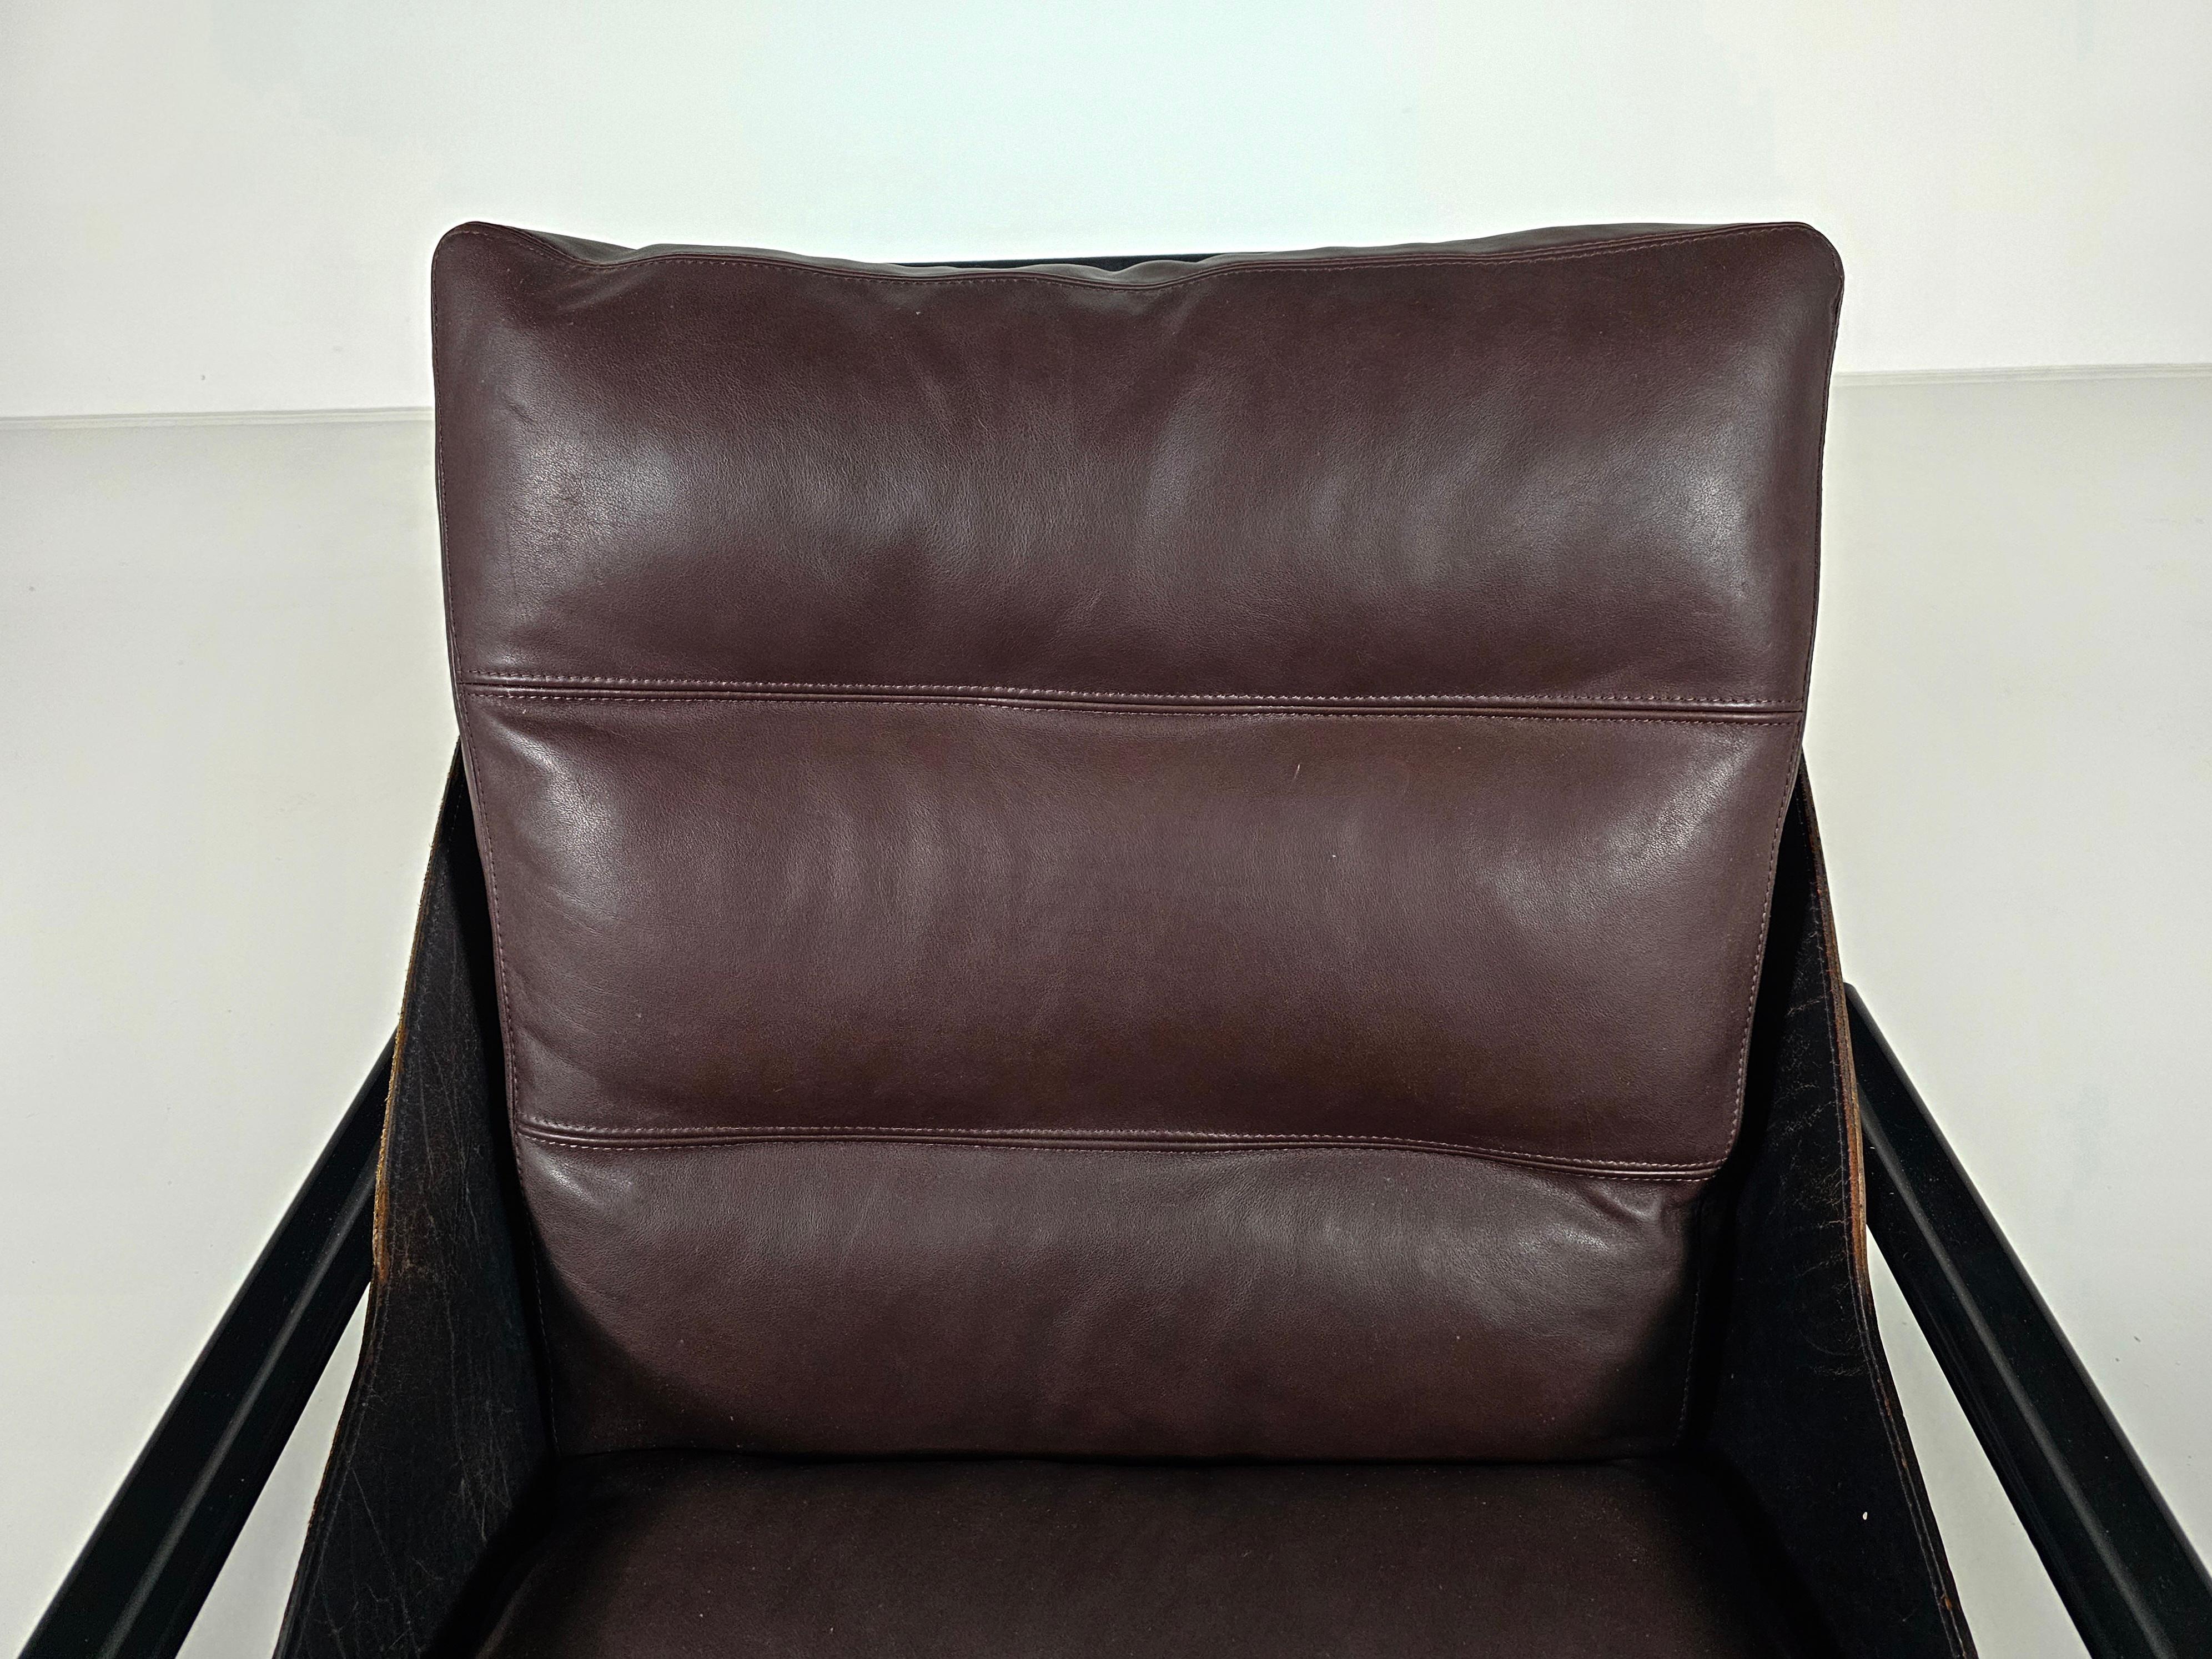  Marco Zanuso Maggiolina lounge chairs in brown and black leather, Zanotta, 1950 2